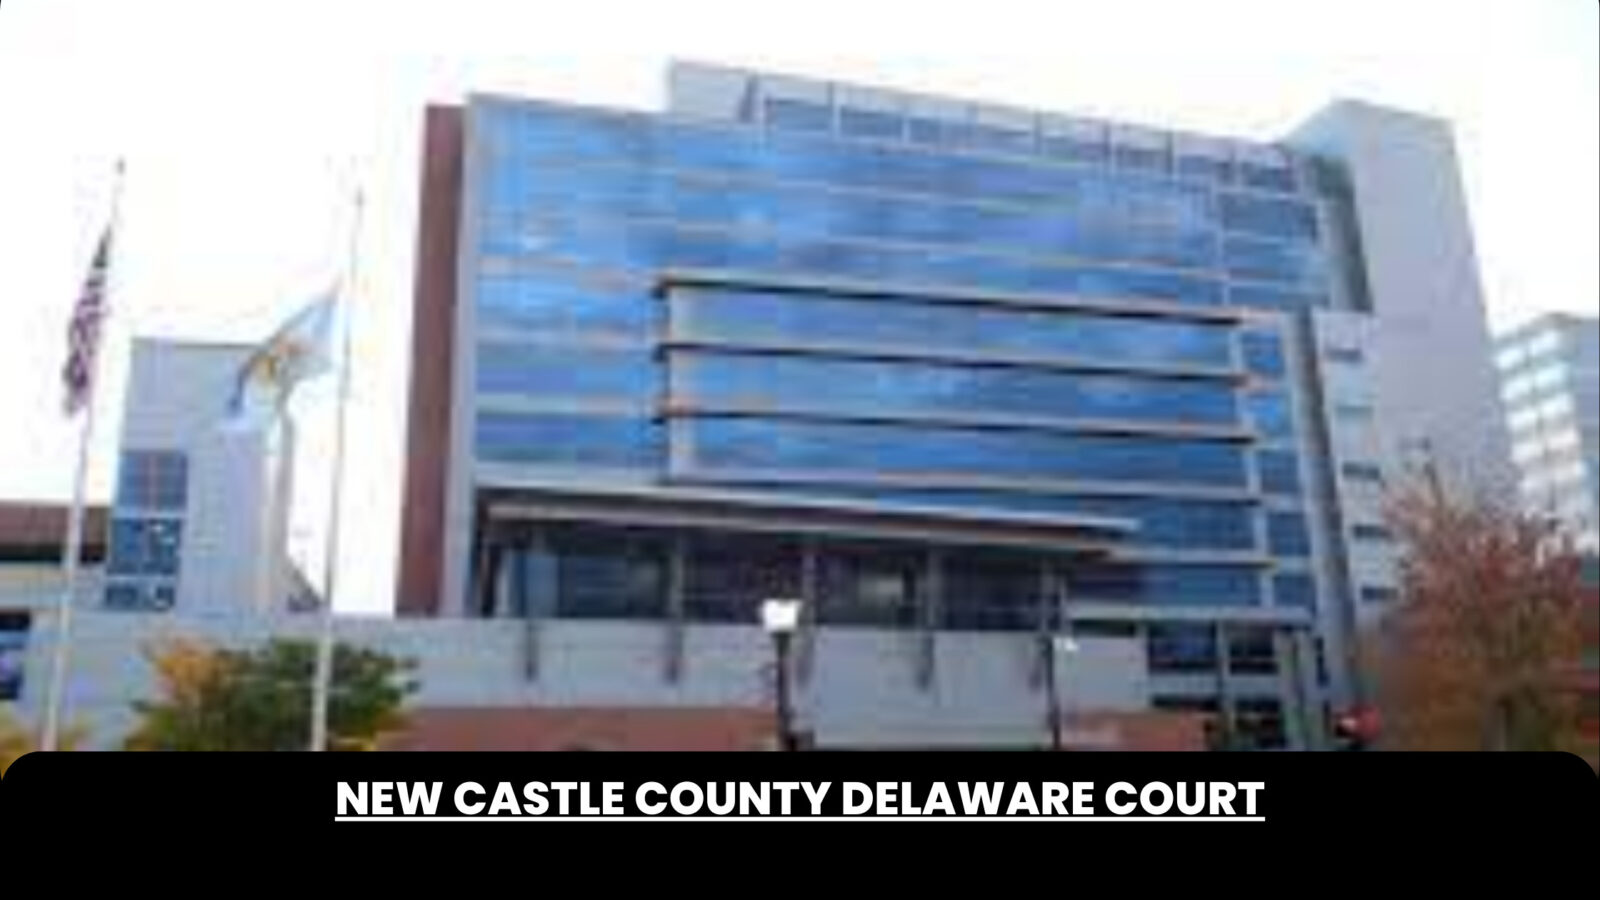 NEW CASTLE COUNTY DELAWARE COURT